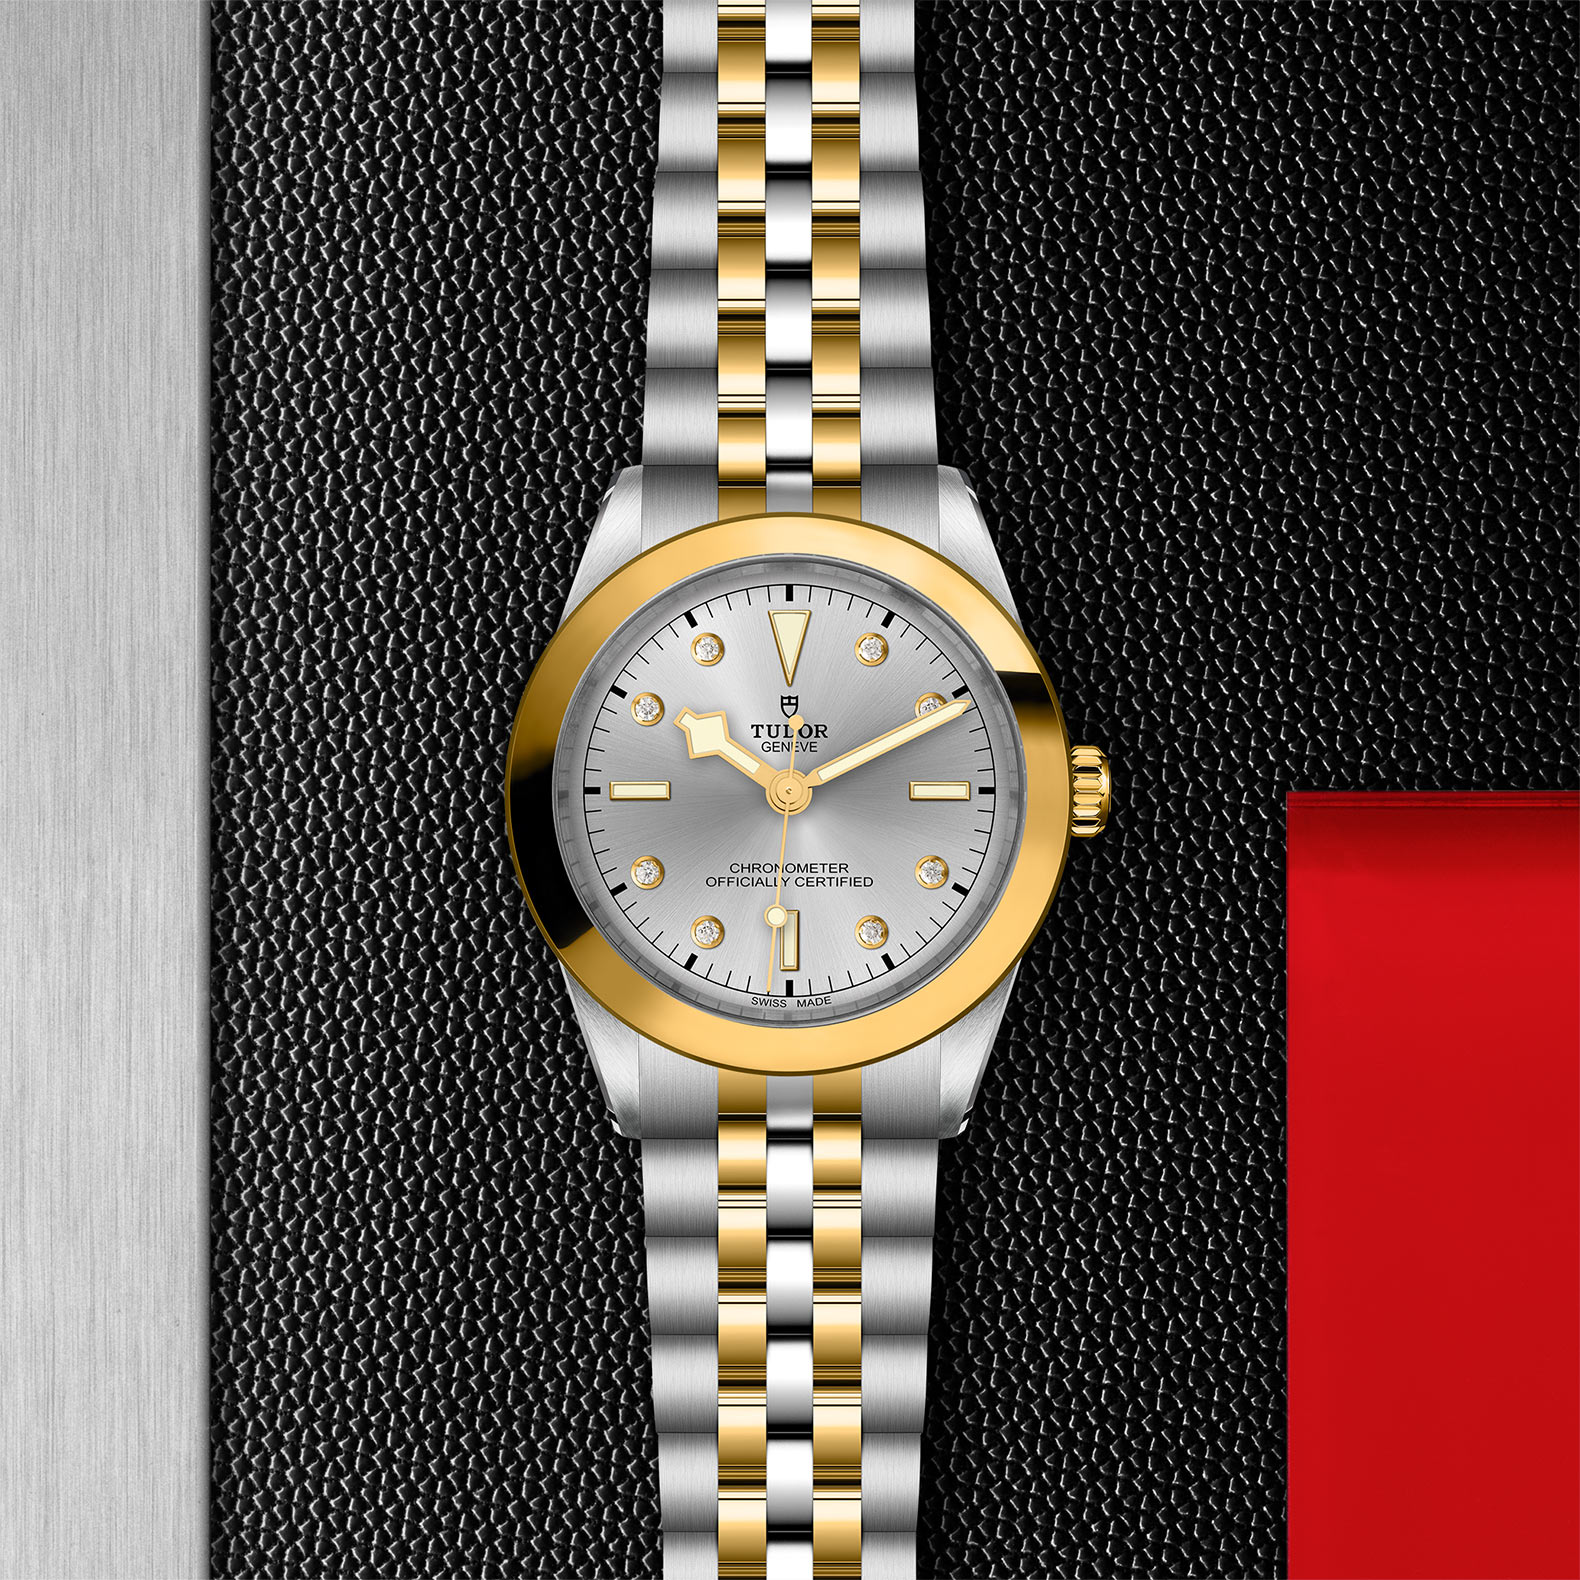 Tudor Watch Assets M79663 0007 Instore Flatlay